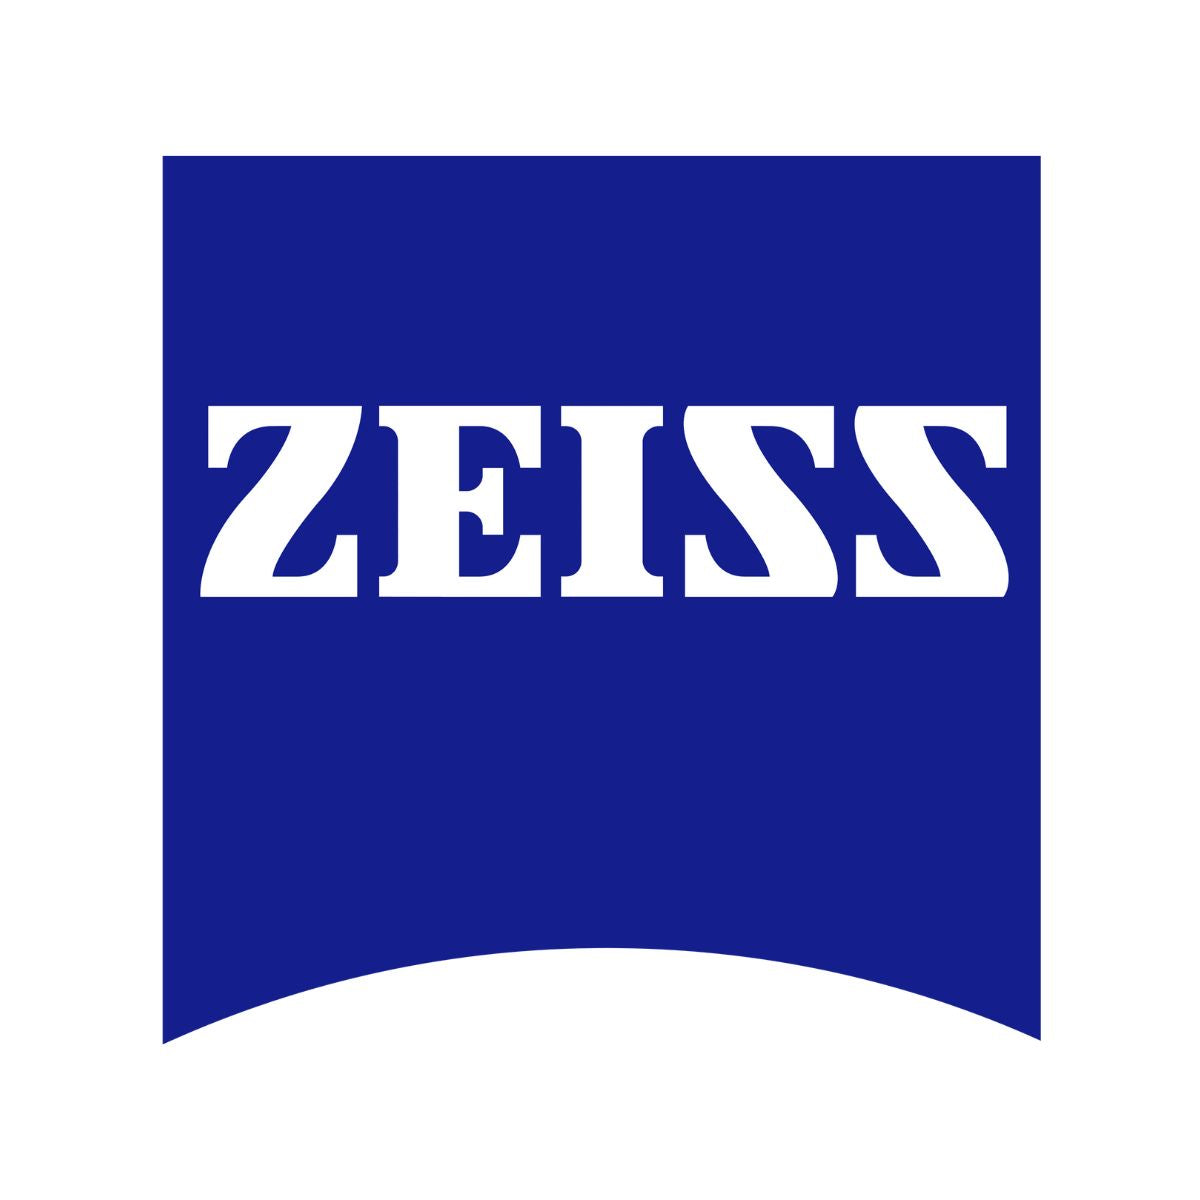 "Zeiss eyewear brands sunglasses & optical frames and lenses at optorium"